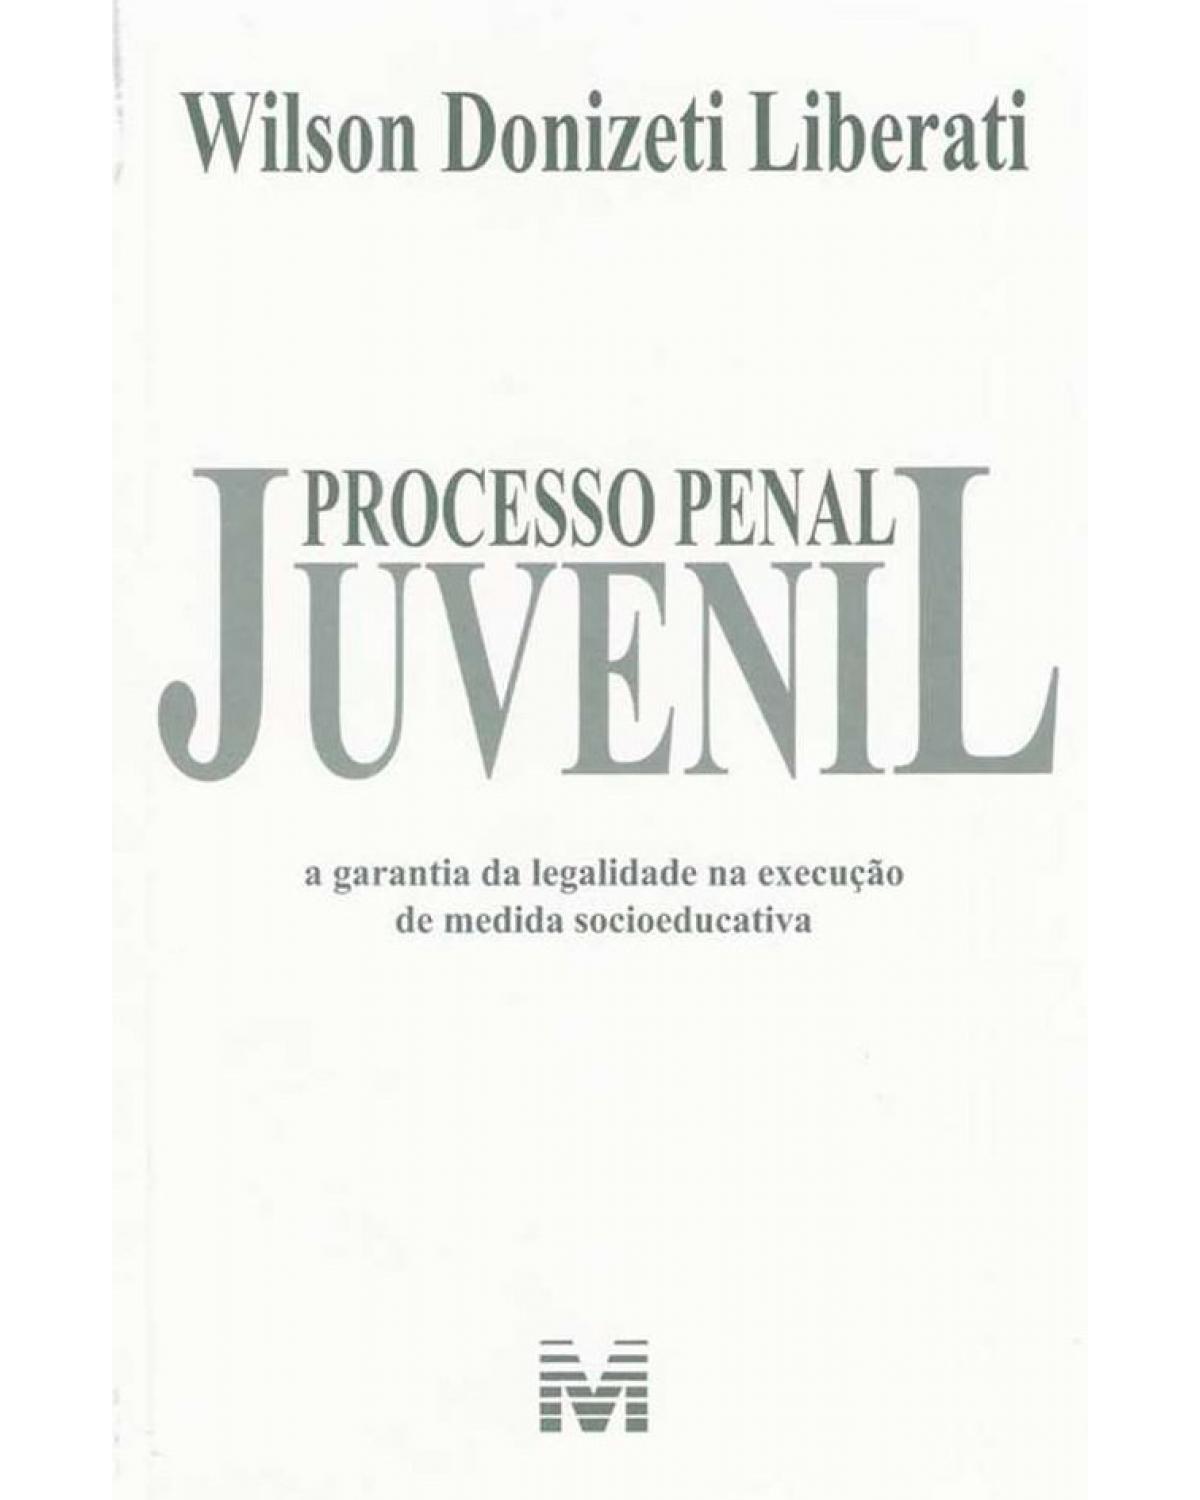 Processo penal juvenil - 1ª Edição